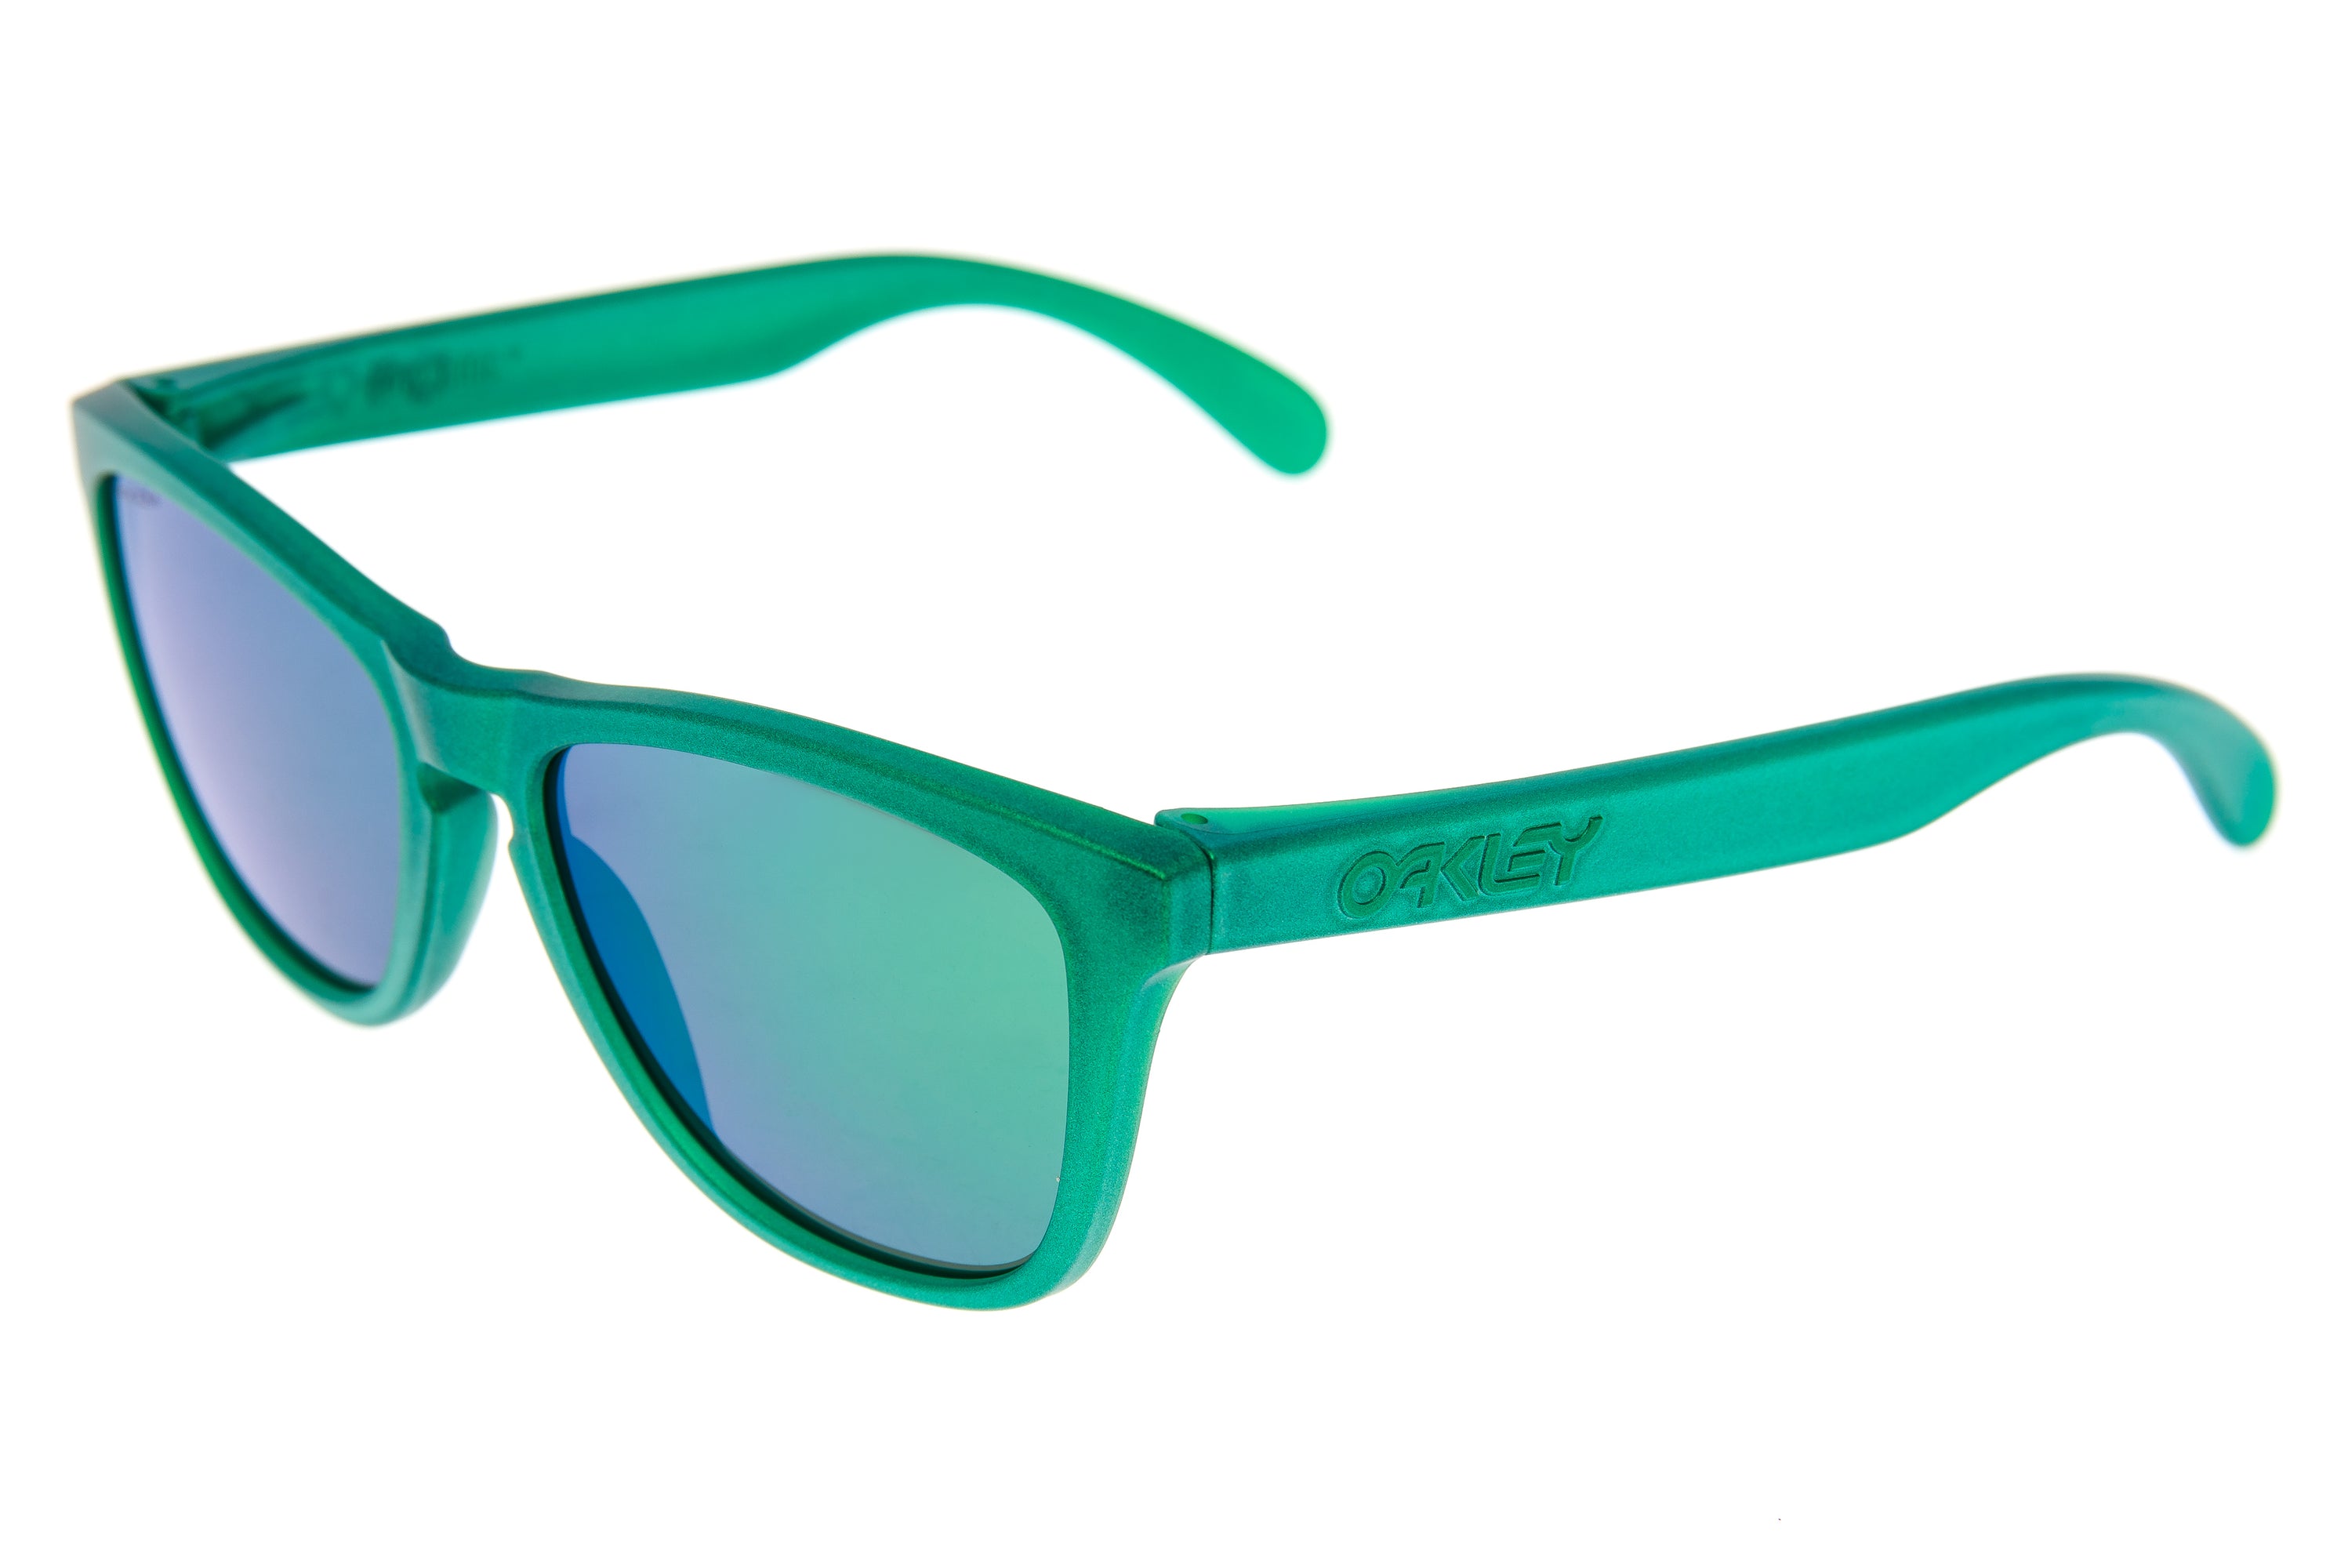 Oakley Frogskins Sunglasses Matte Green Frame Pr | The Pro's Closet